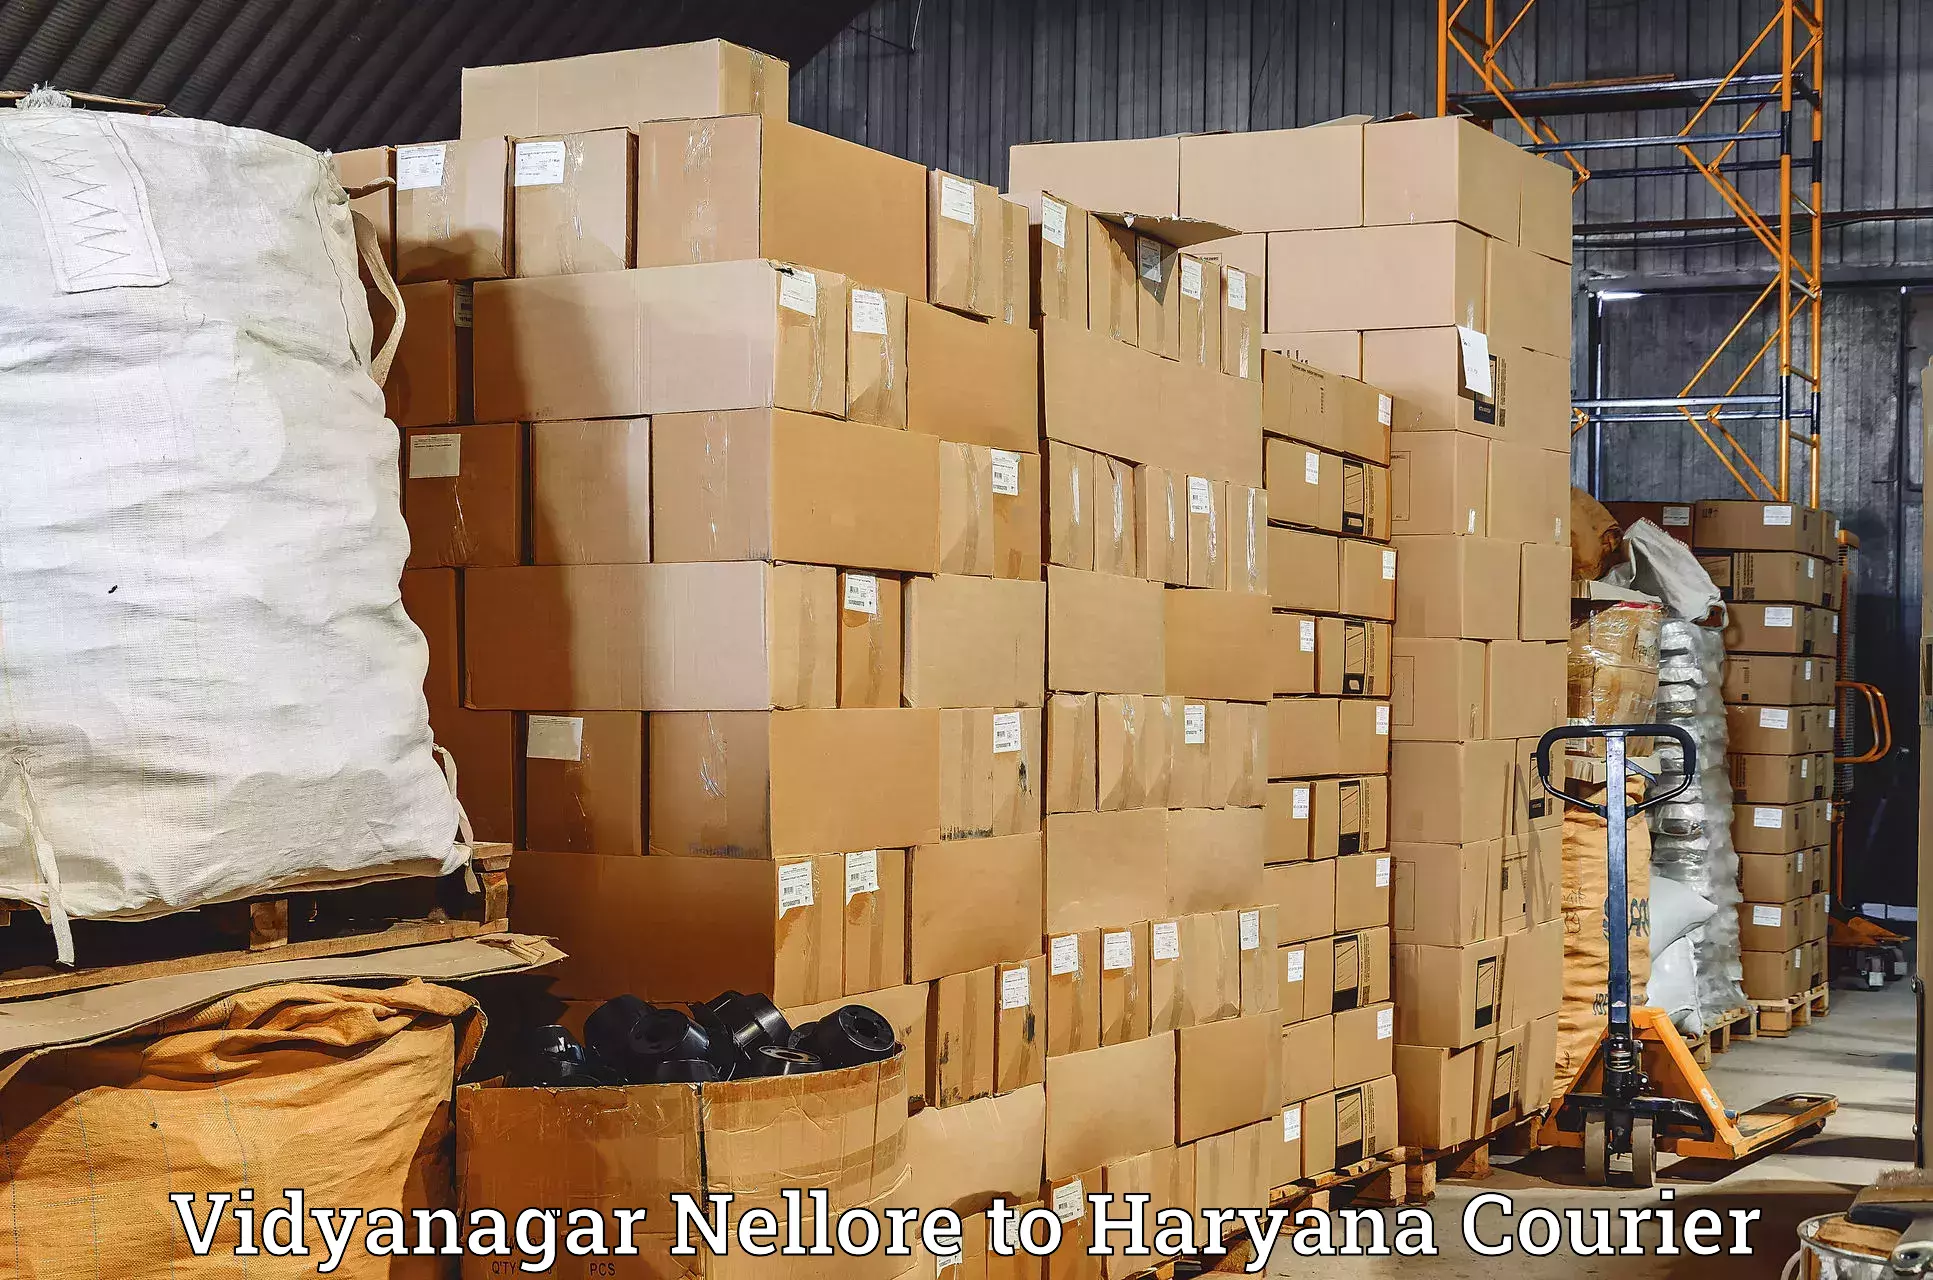 Reliable courier service in Vidyanagar Nellore to Haryana